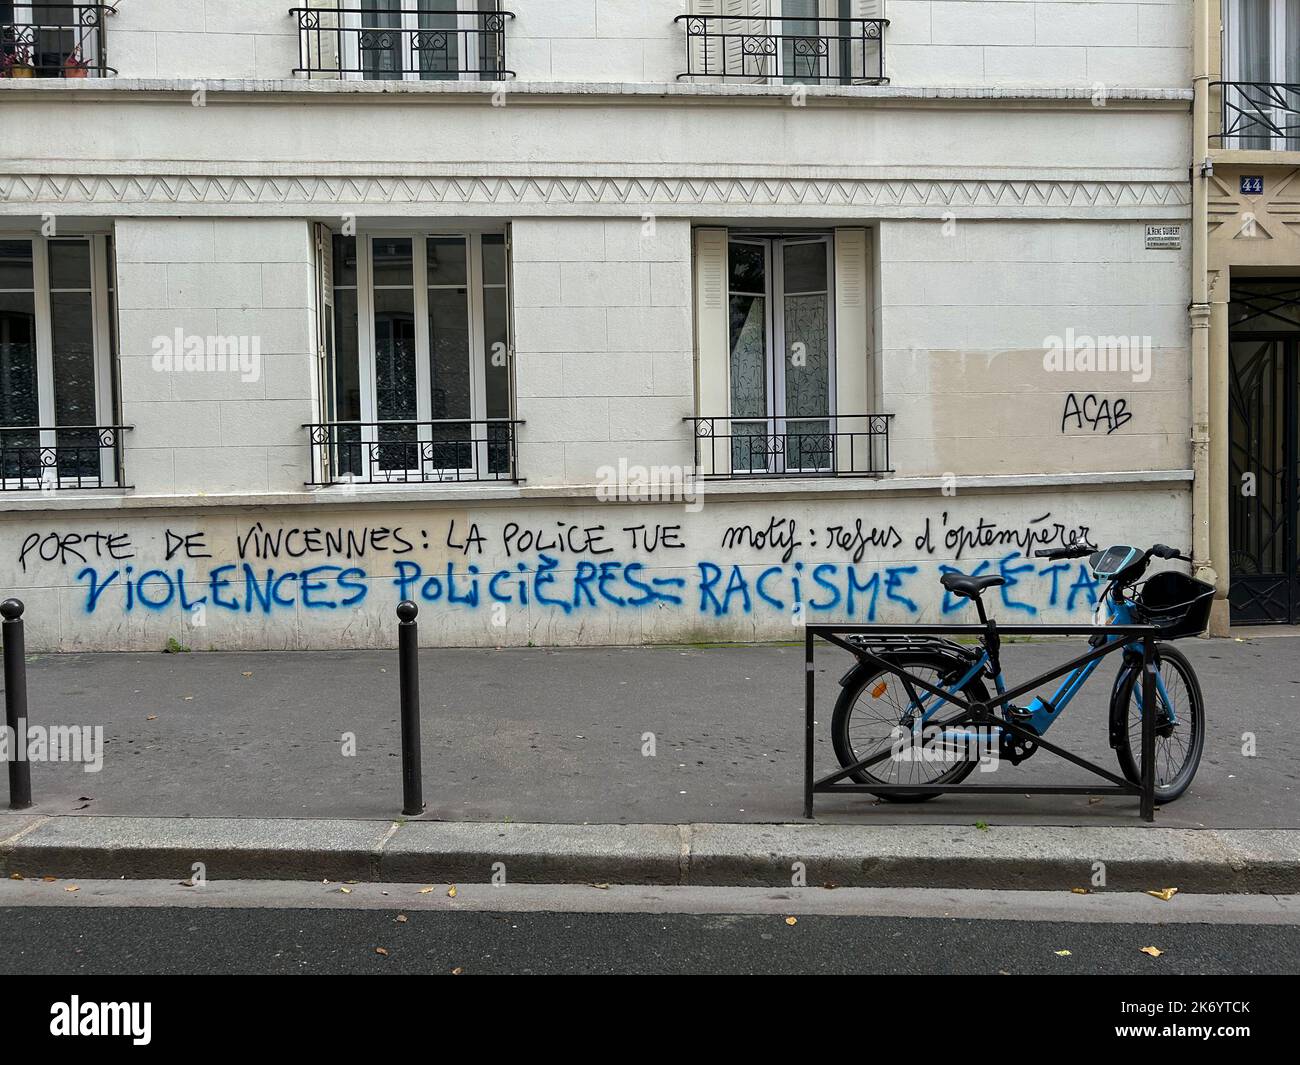 Paris, France, Wall Graffitti on Street ART, 12th District, Protest Against Police Violence, Porte de VIncennes Incident Stock Photo